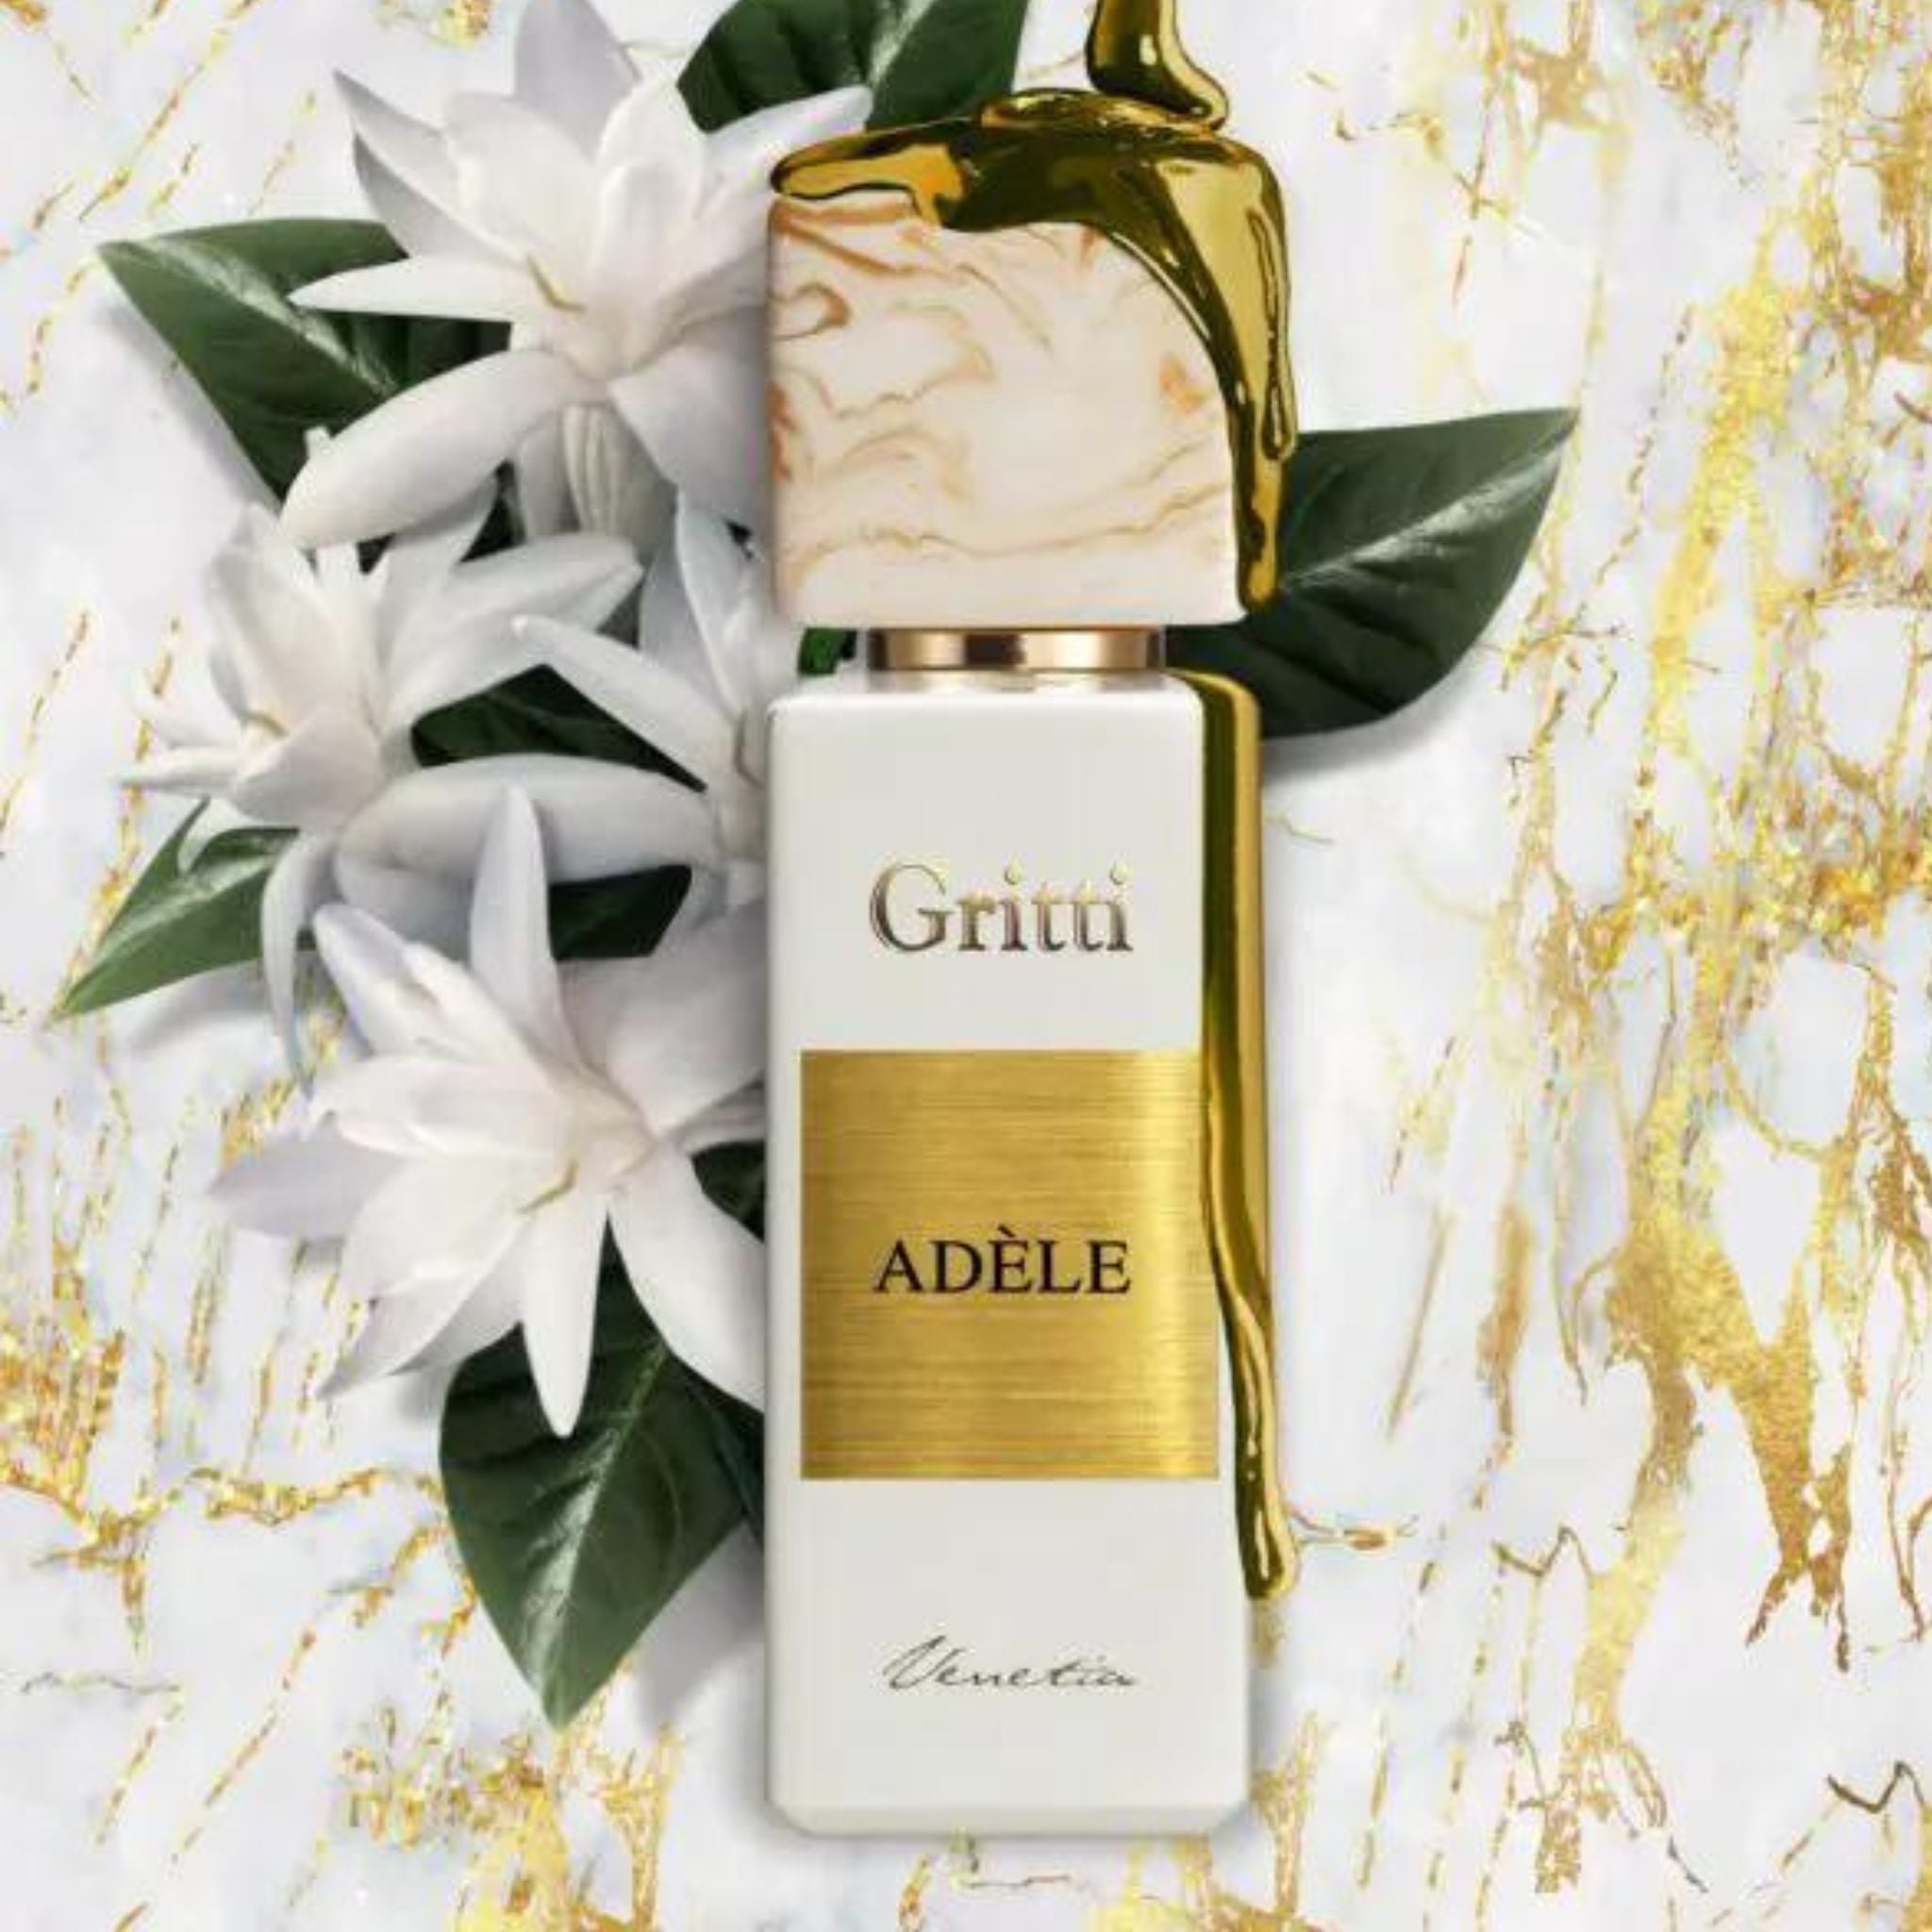 Adele Perfume by Gritti